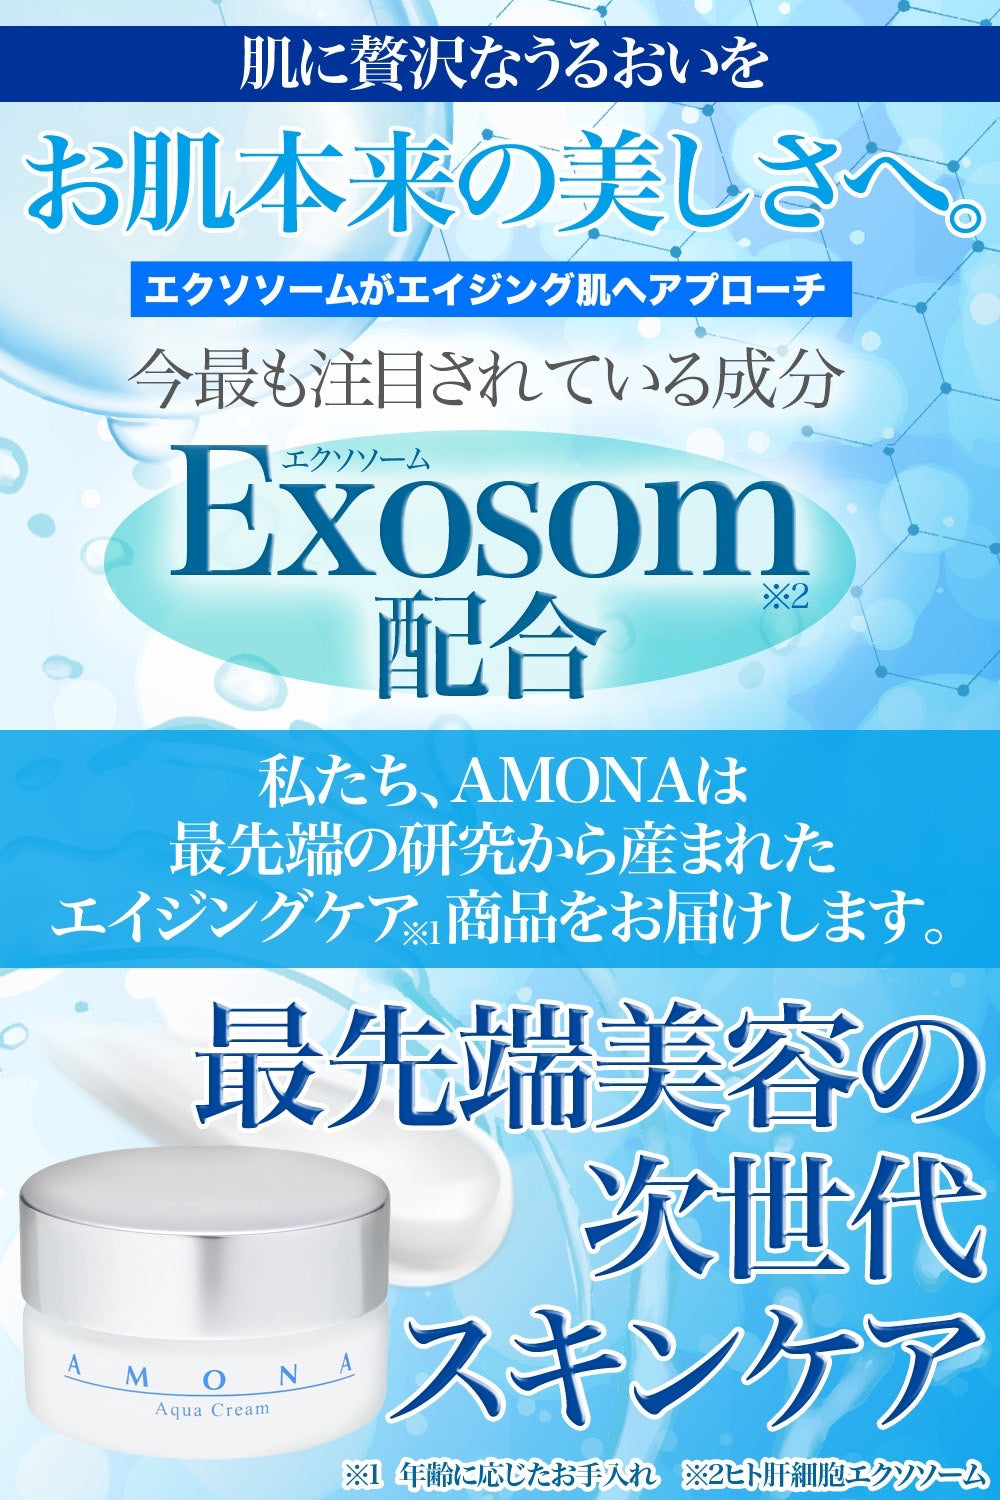 AMONA 高濃度 ヒト幹細胞 培養液 高級 保湿クリーム 顔 シカクリーム ...